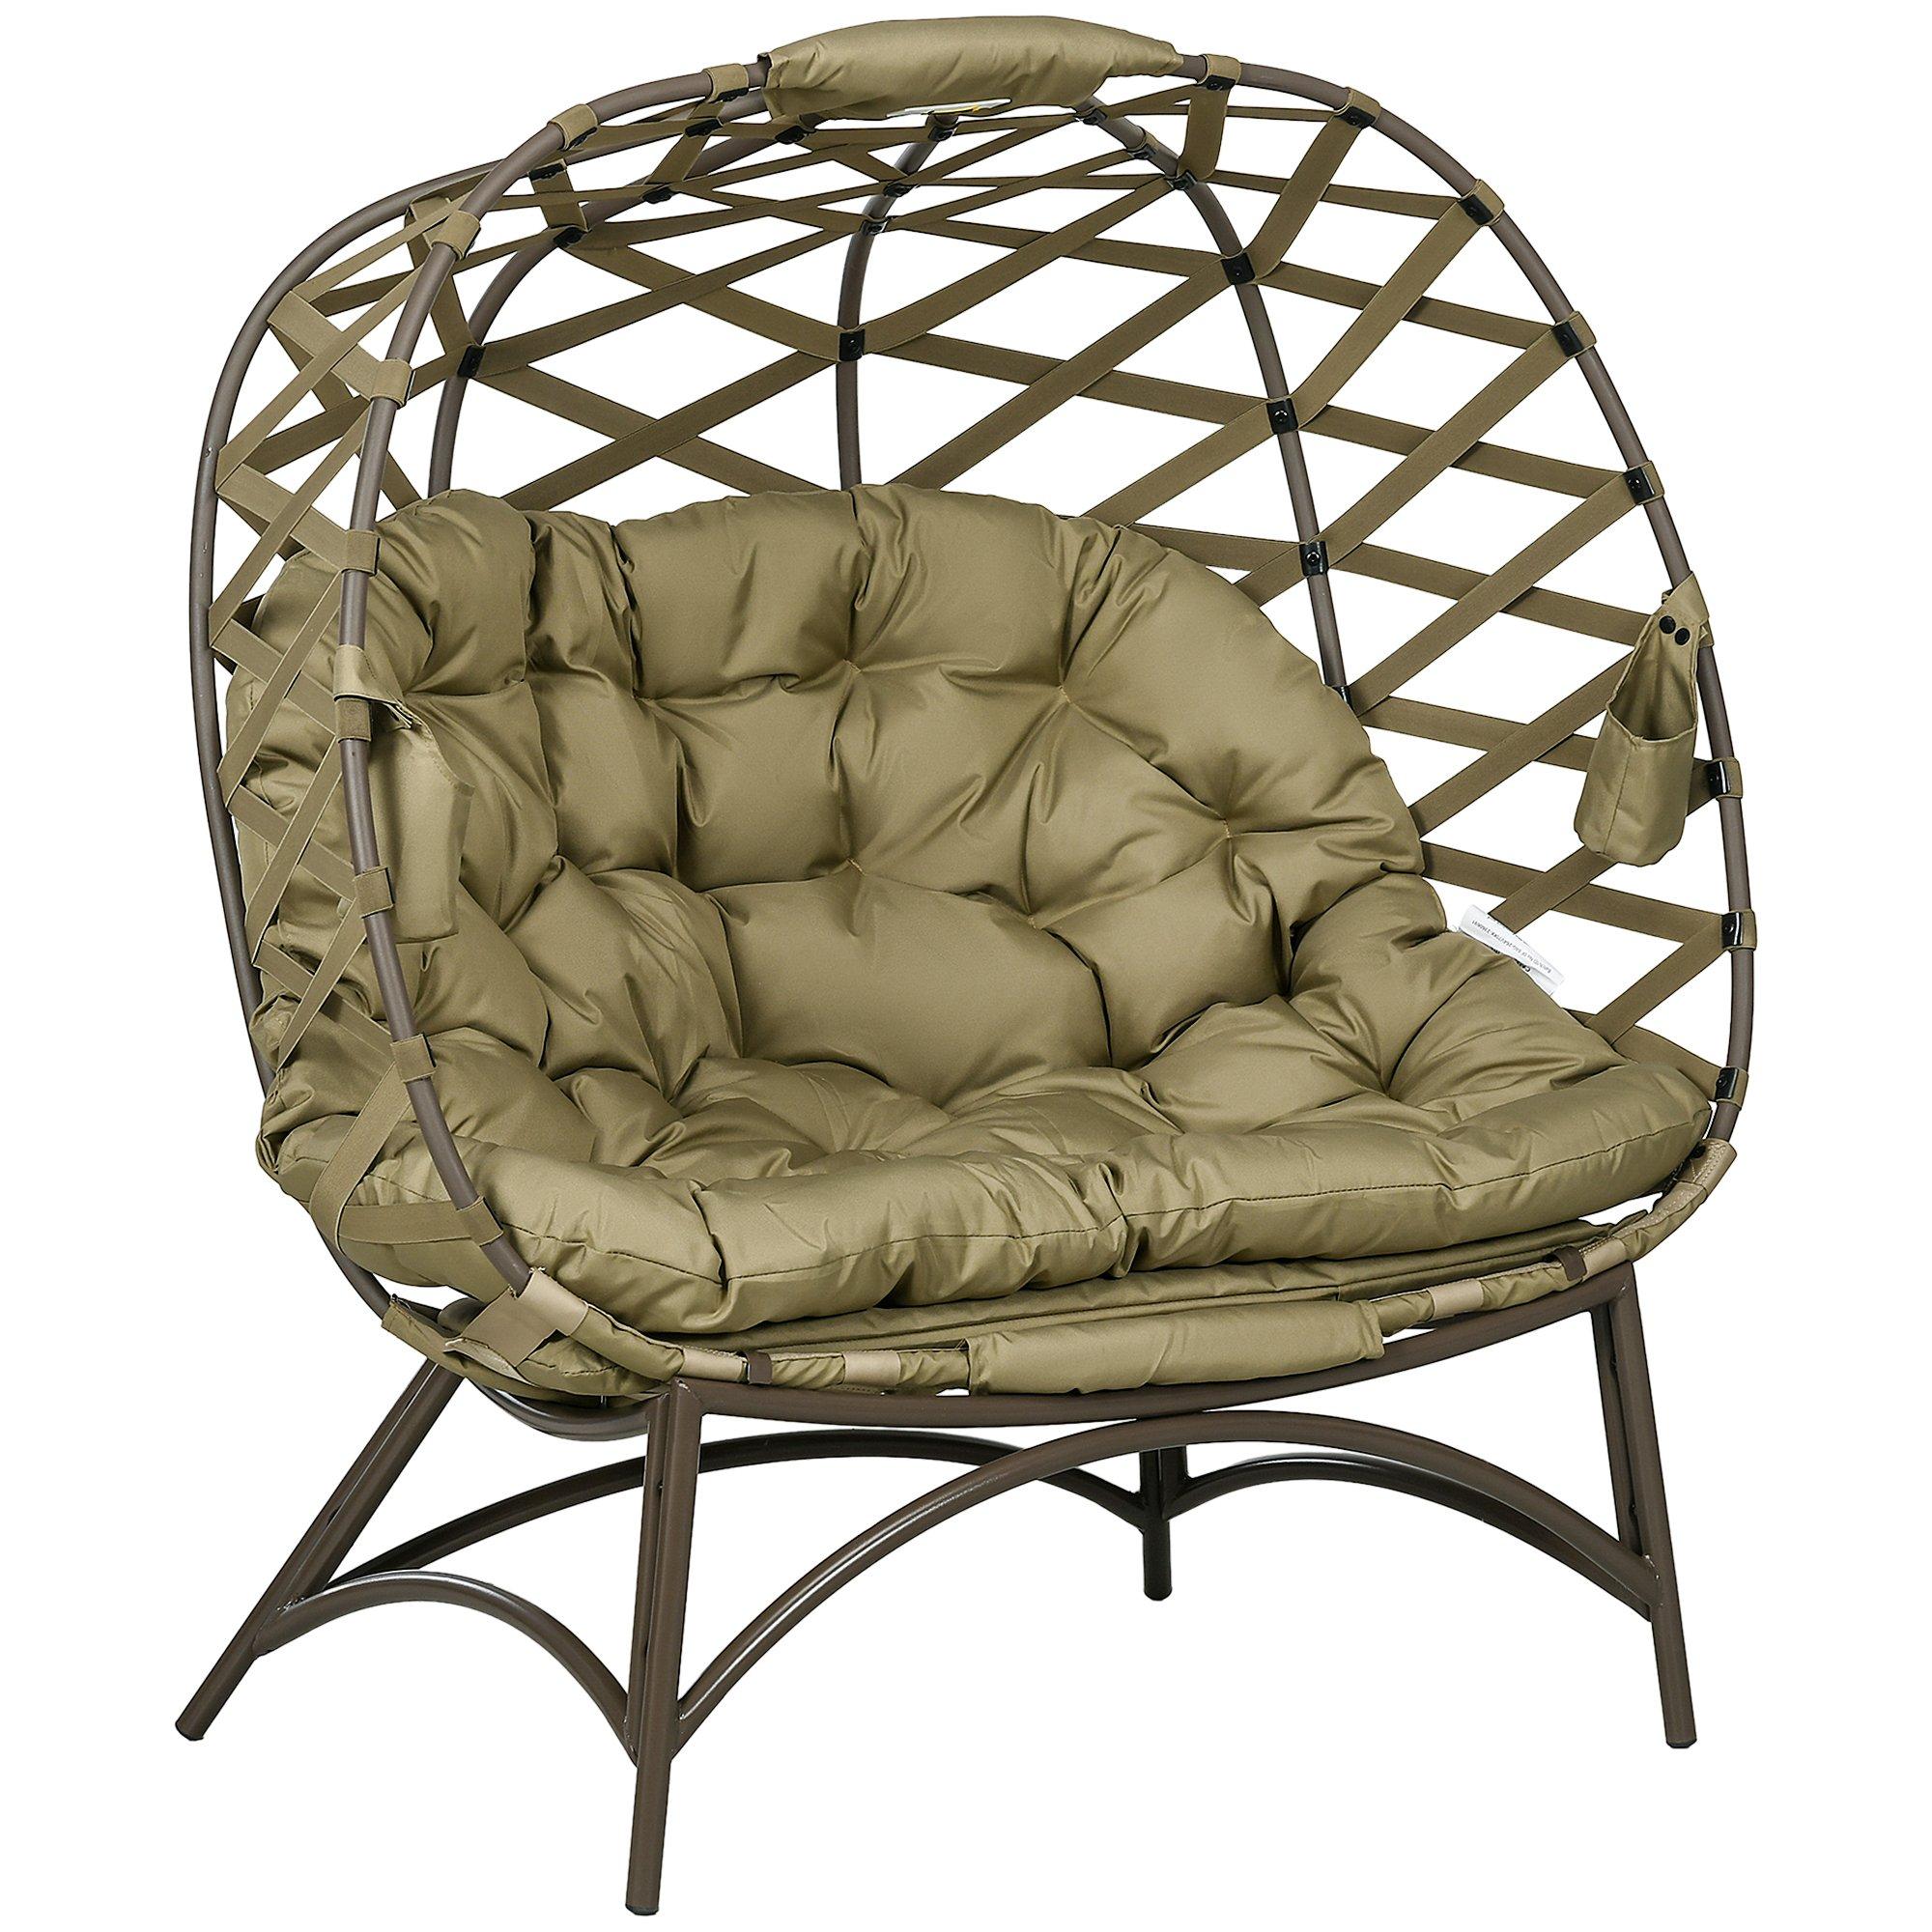 2 Seater Egg Chair Outdoor Garden Furniture Chair w/ Cushion